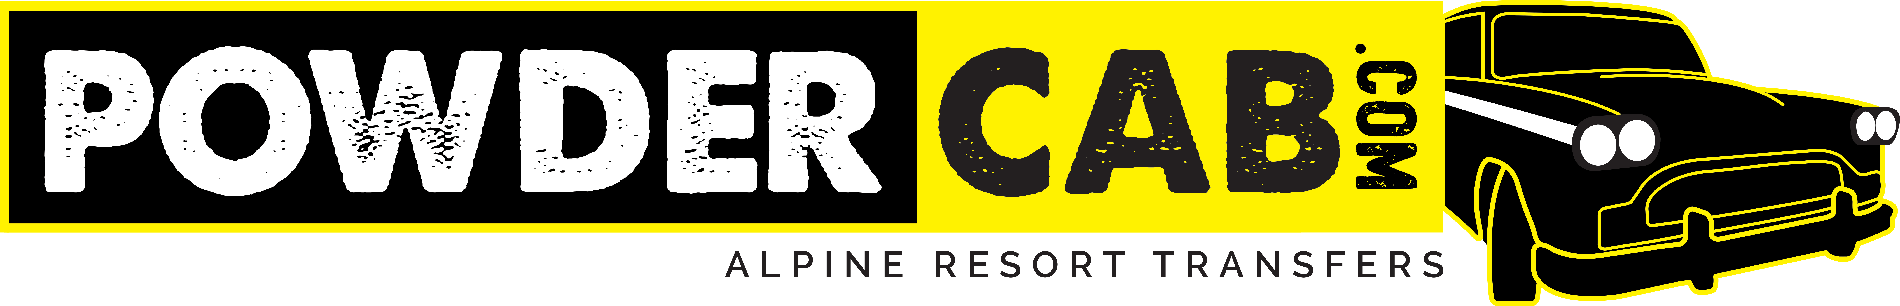 Alpine Resort Transfers